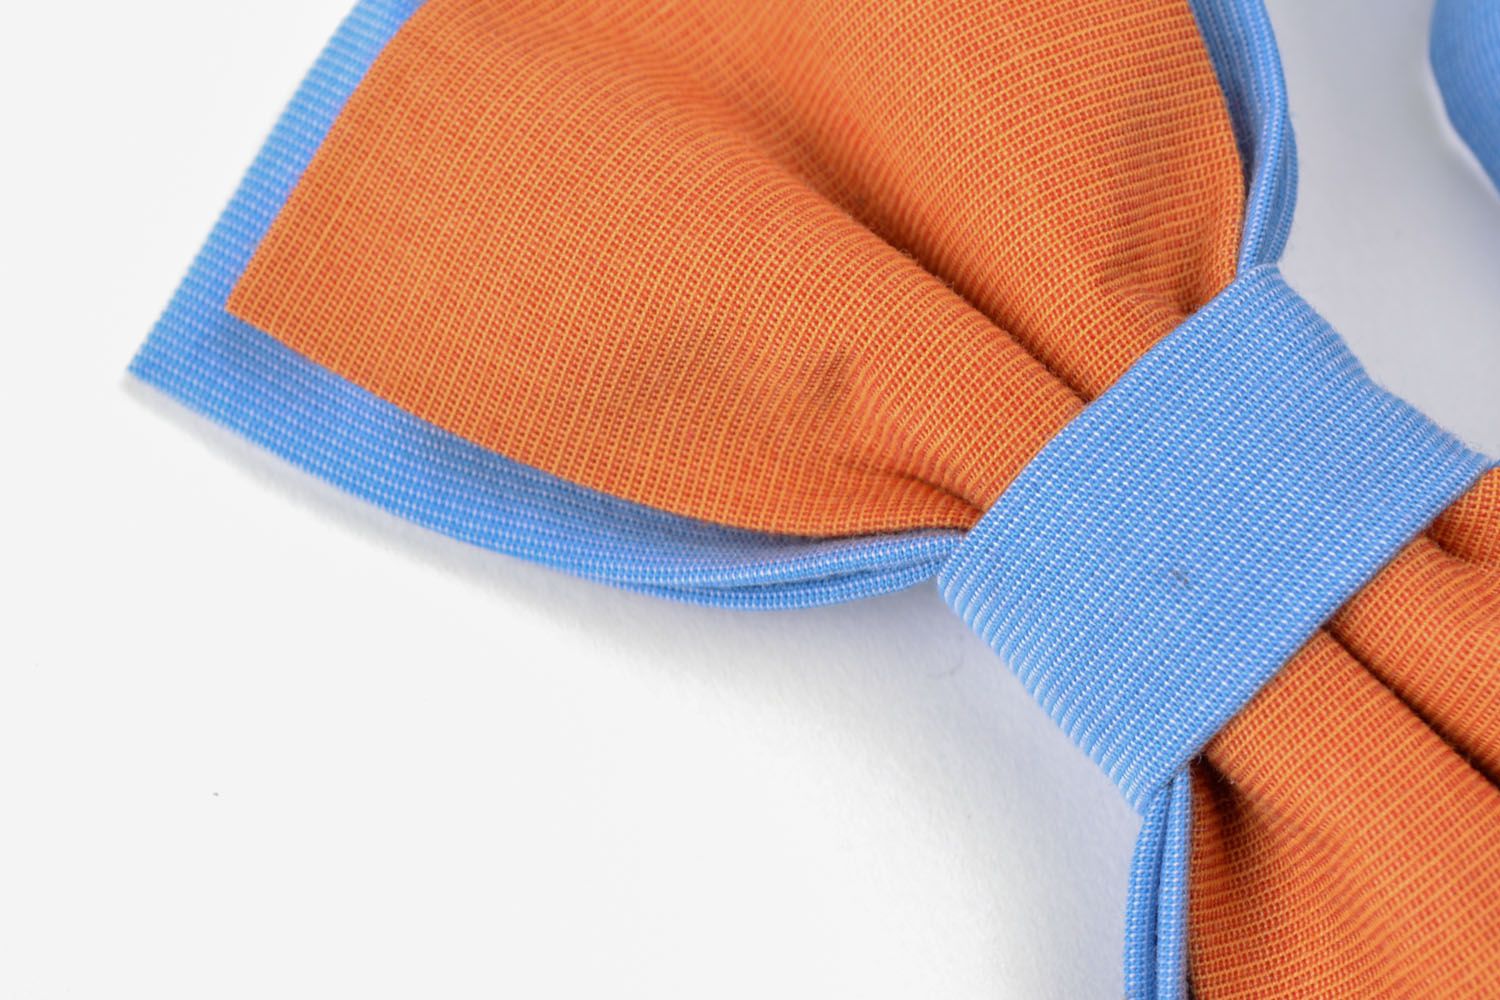 Homemade fabric bow tie photo 3